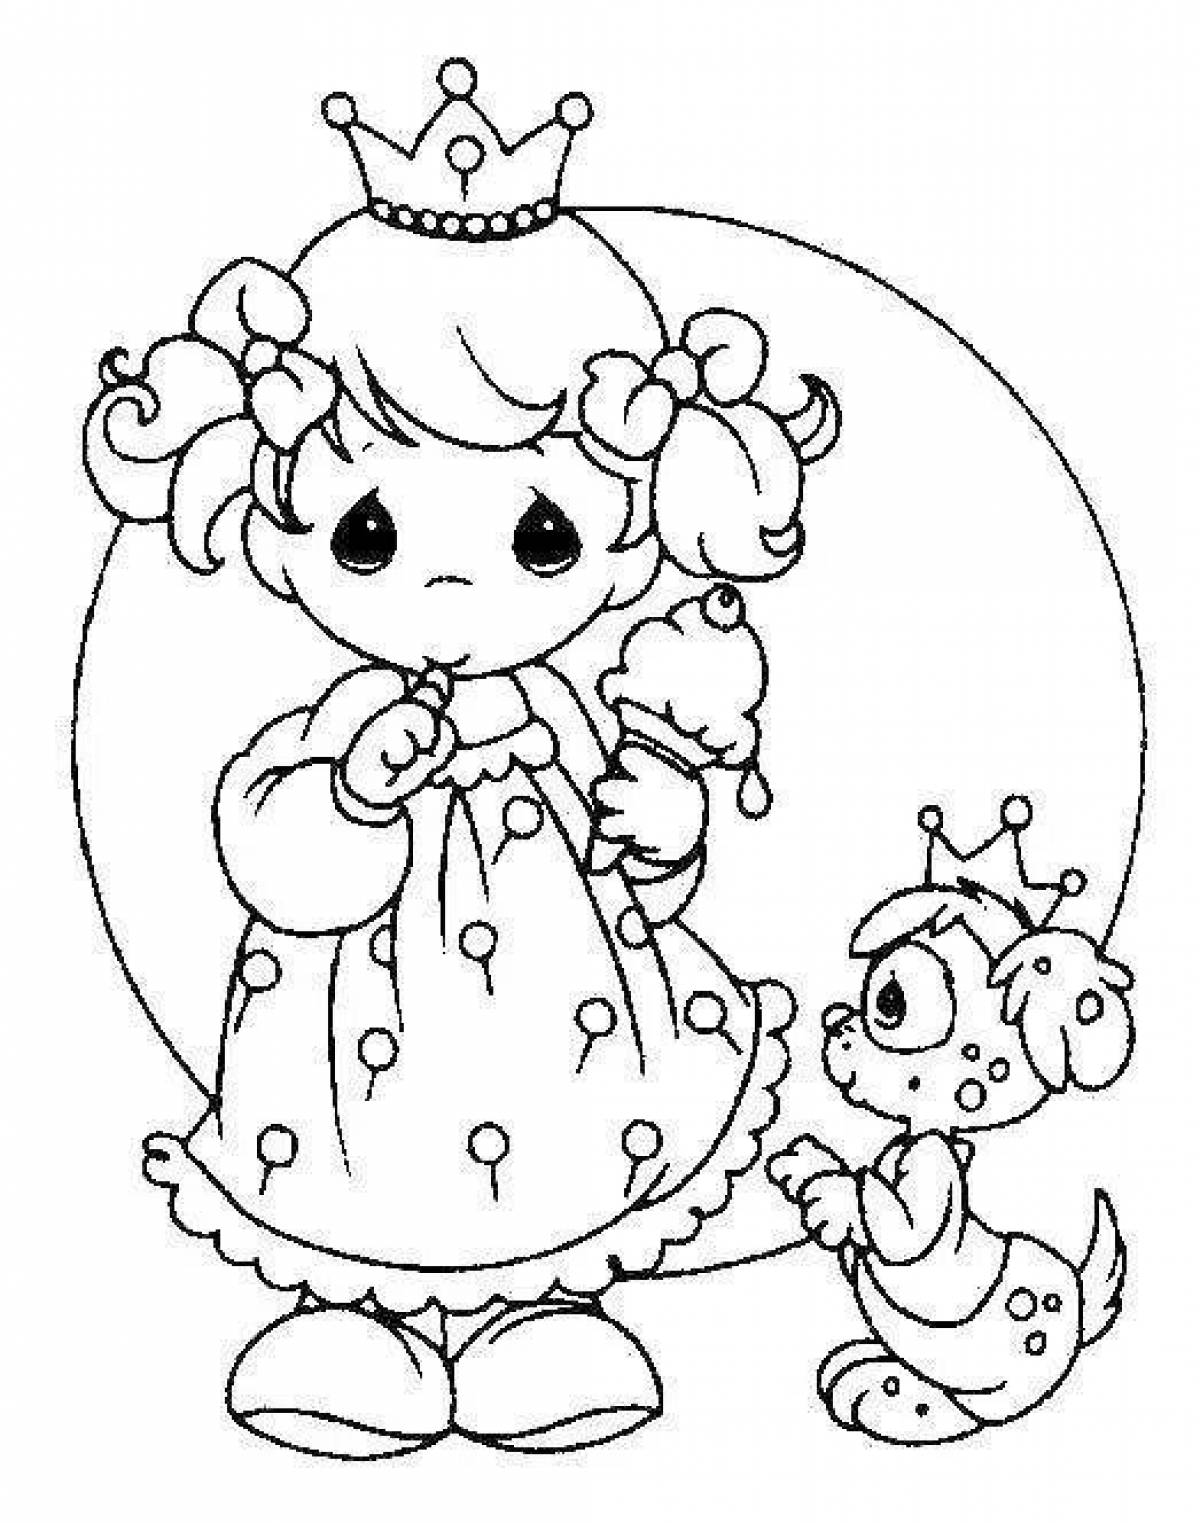 Coloring page joyful little princess